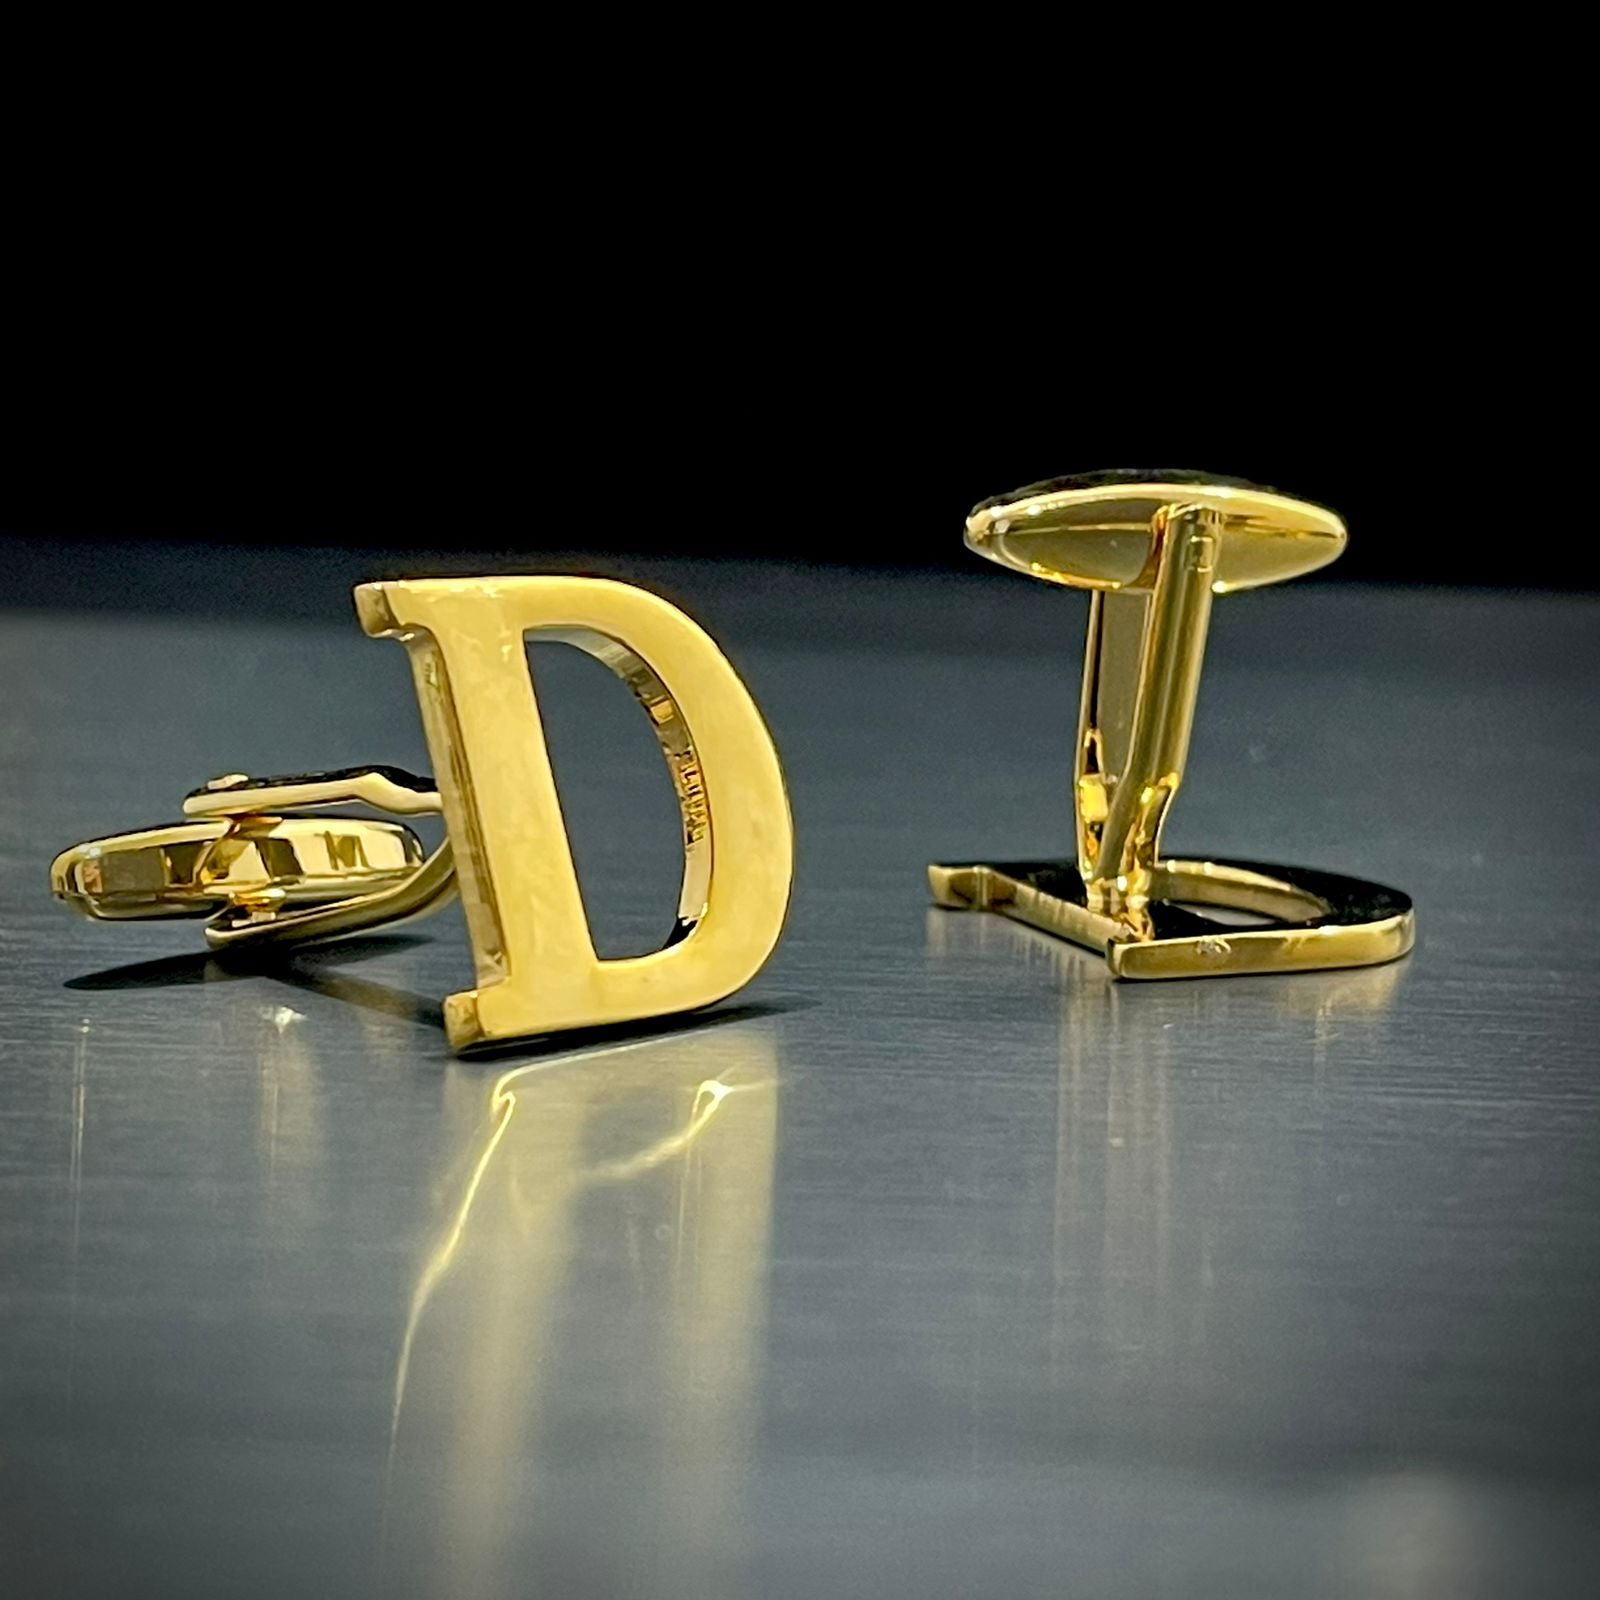 D Letter Alphabet Name Initial Golden Cufflinks For Men Online In Pakistan